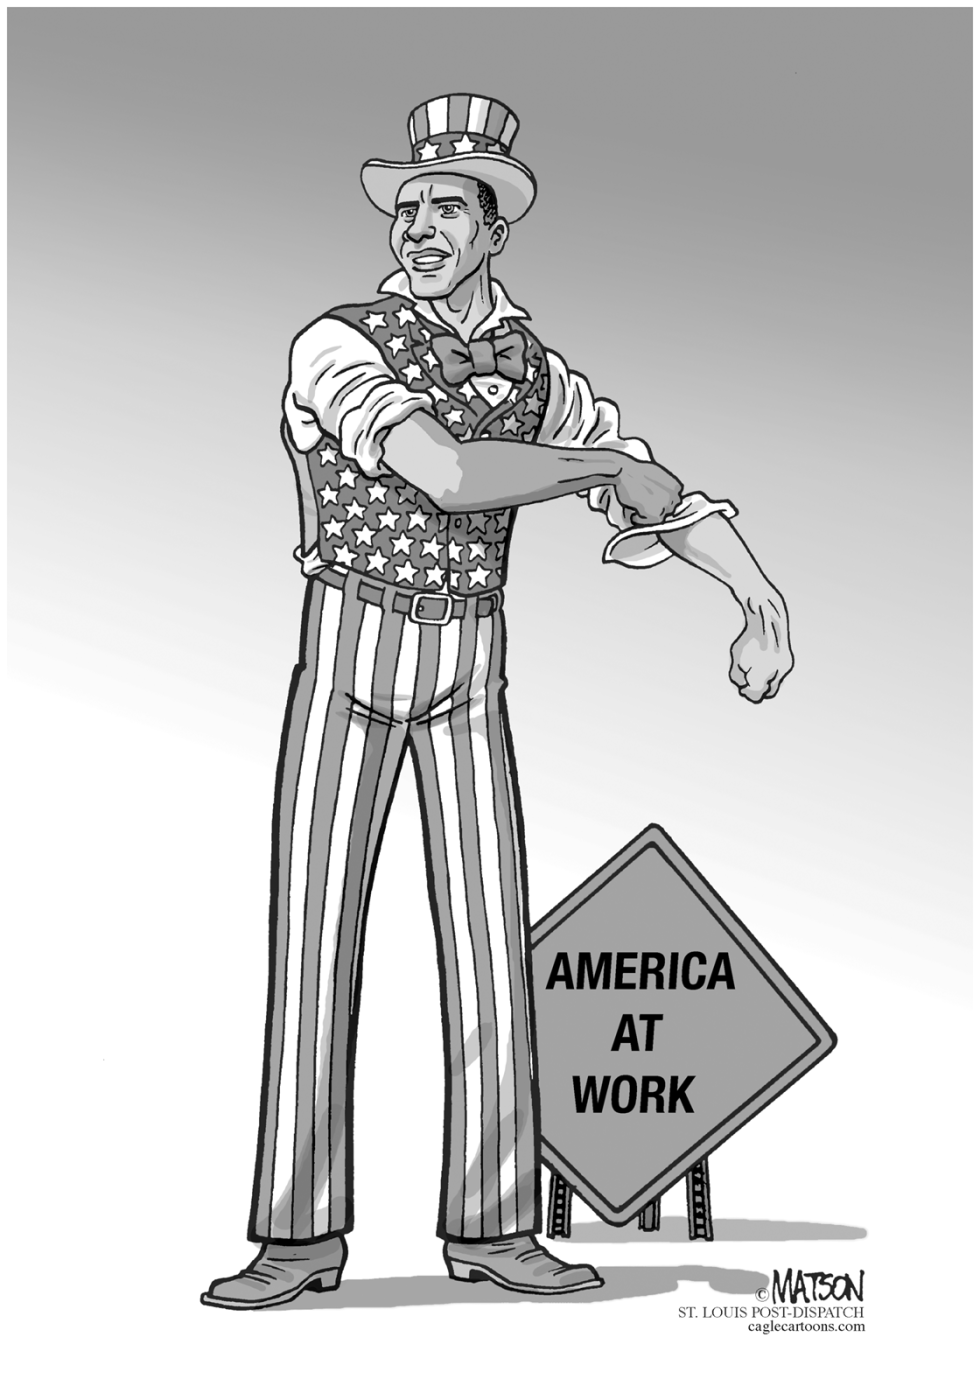 AMERICA AT WORK by R.J. Matson